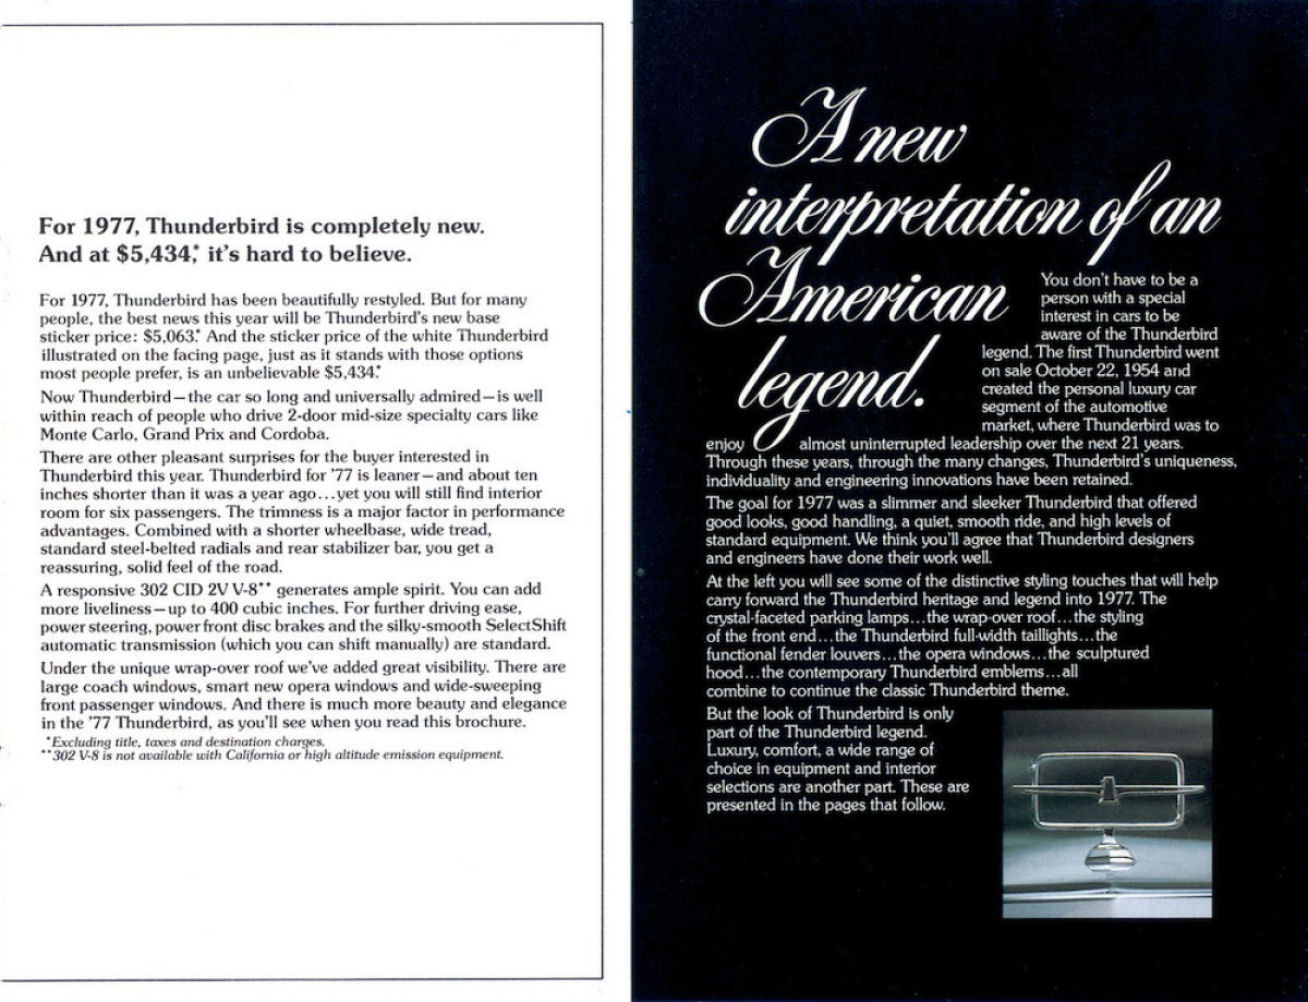 n_1977 Ford Thunderbird Mailer-03.jpg